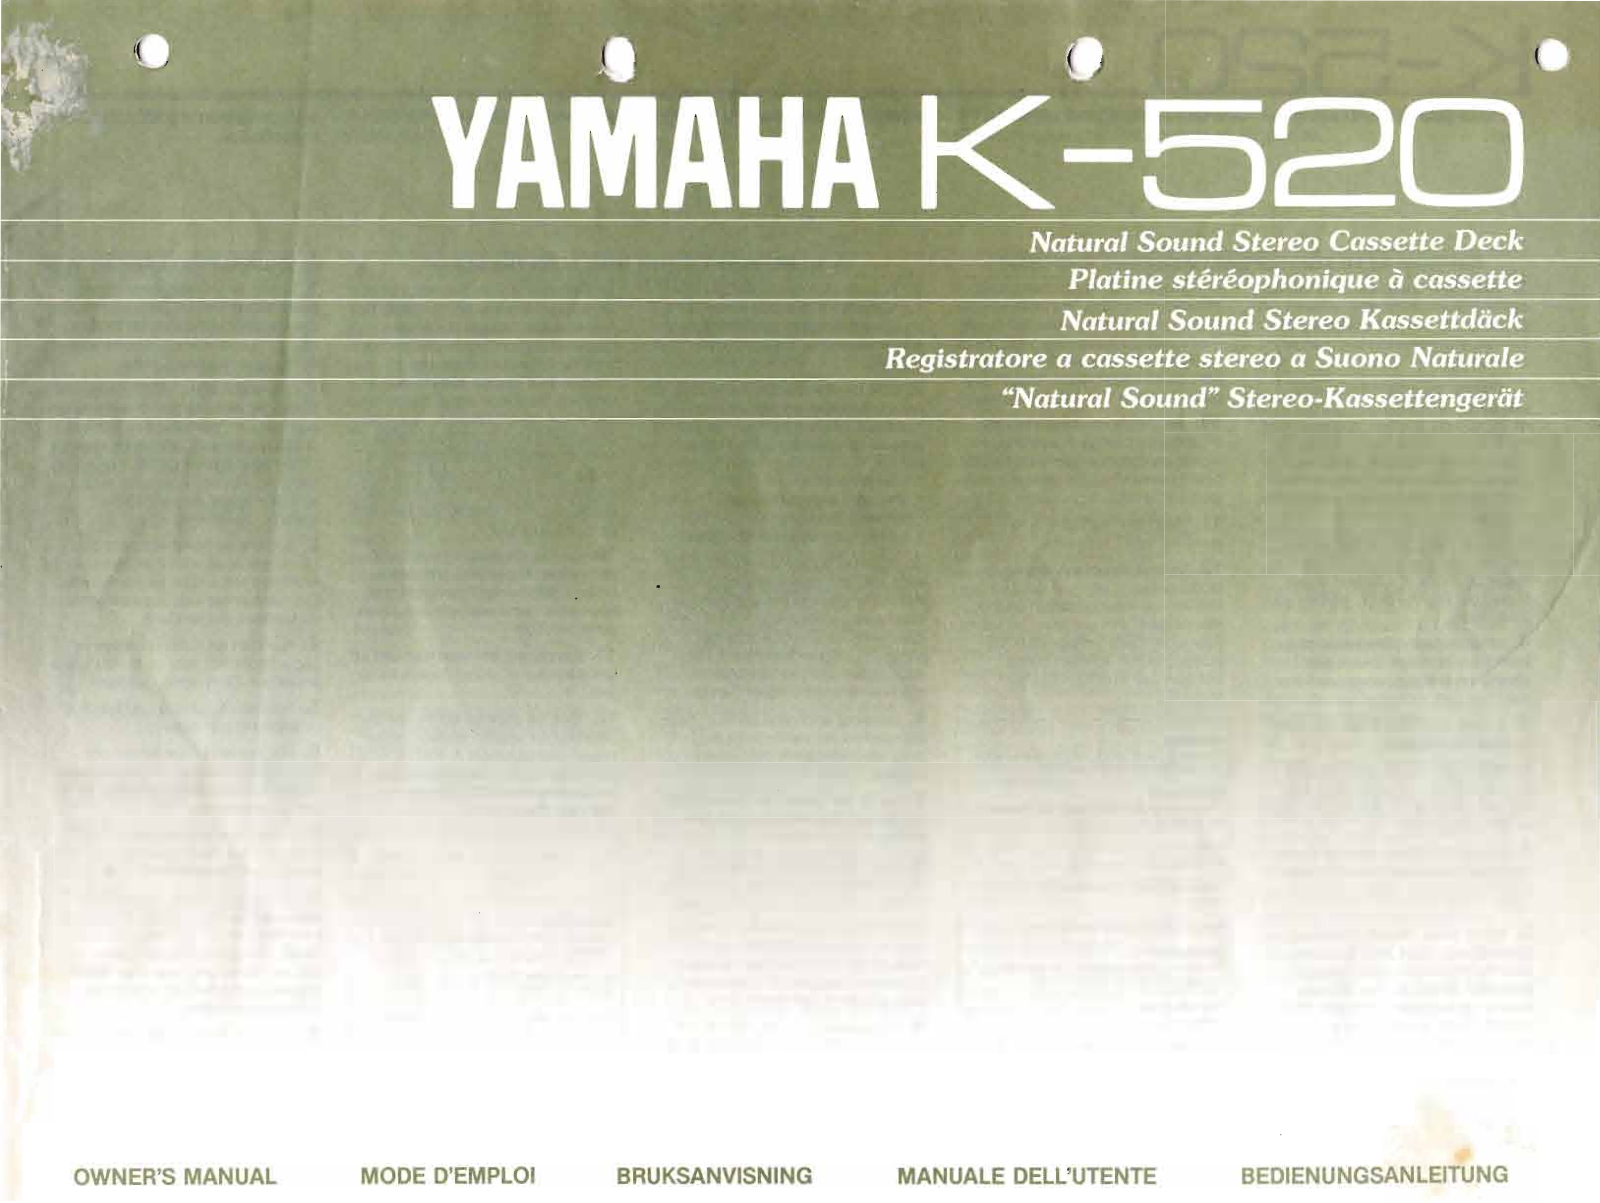 Yamaha K-520 Owners Manual